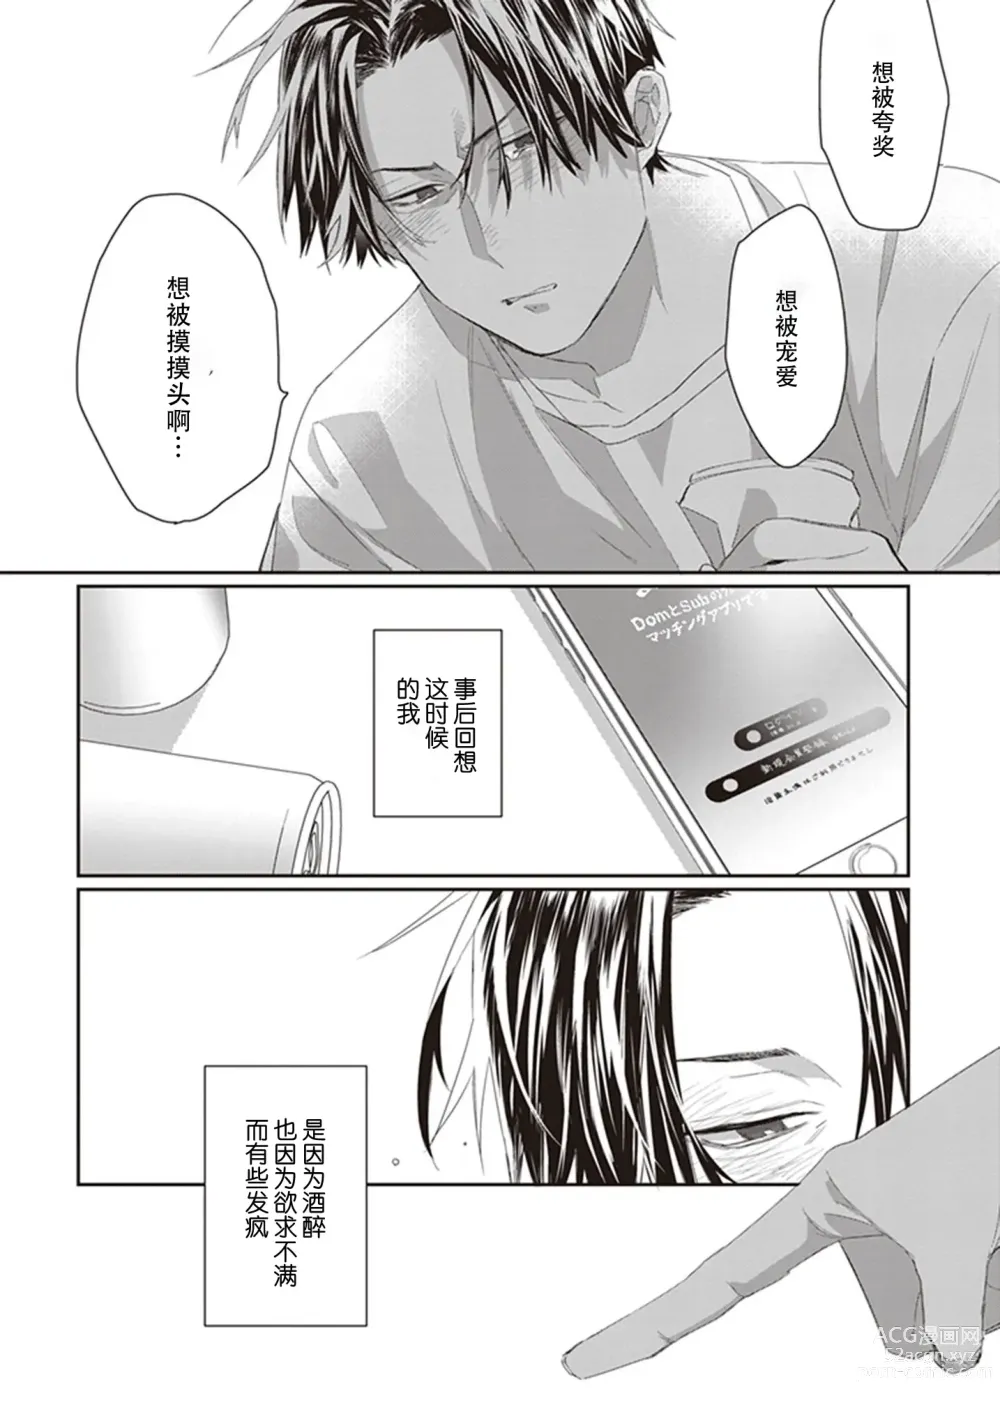 Page 12 of manga 给予乖孩子的奖励